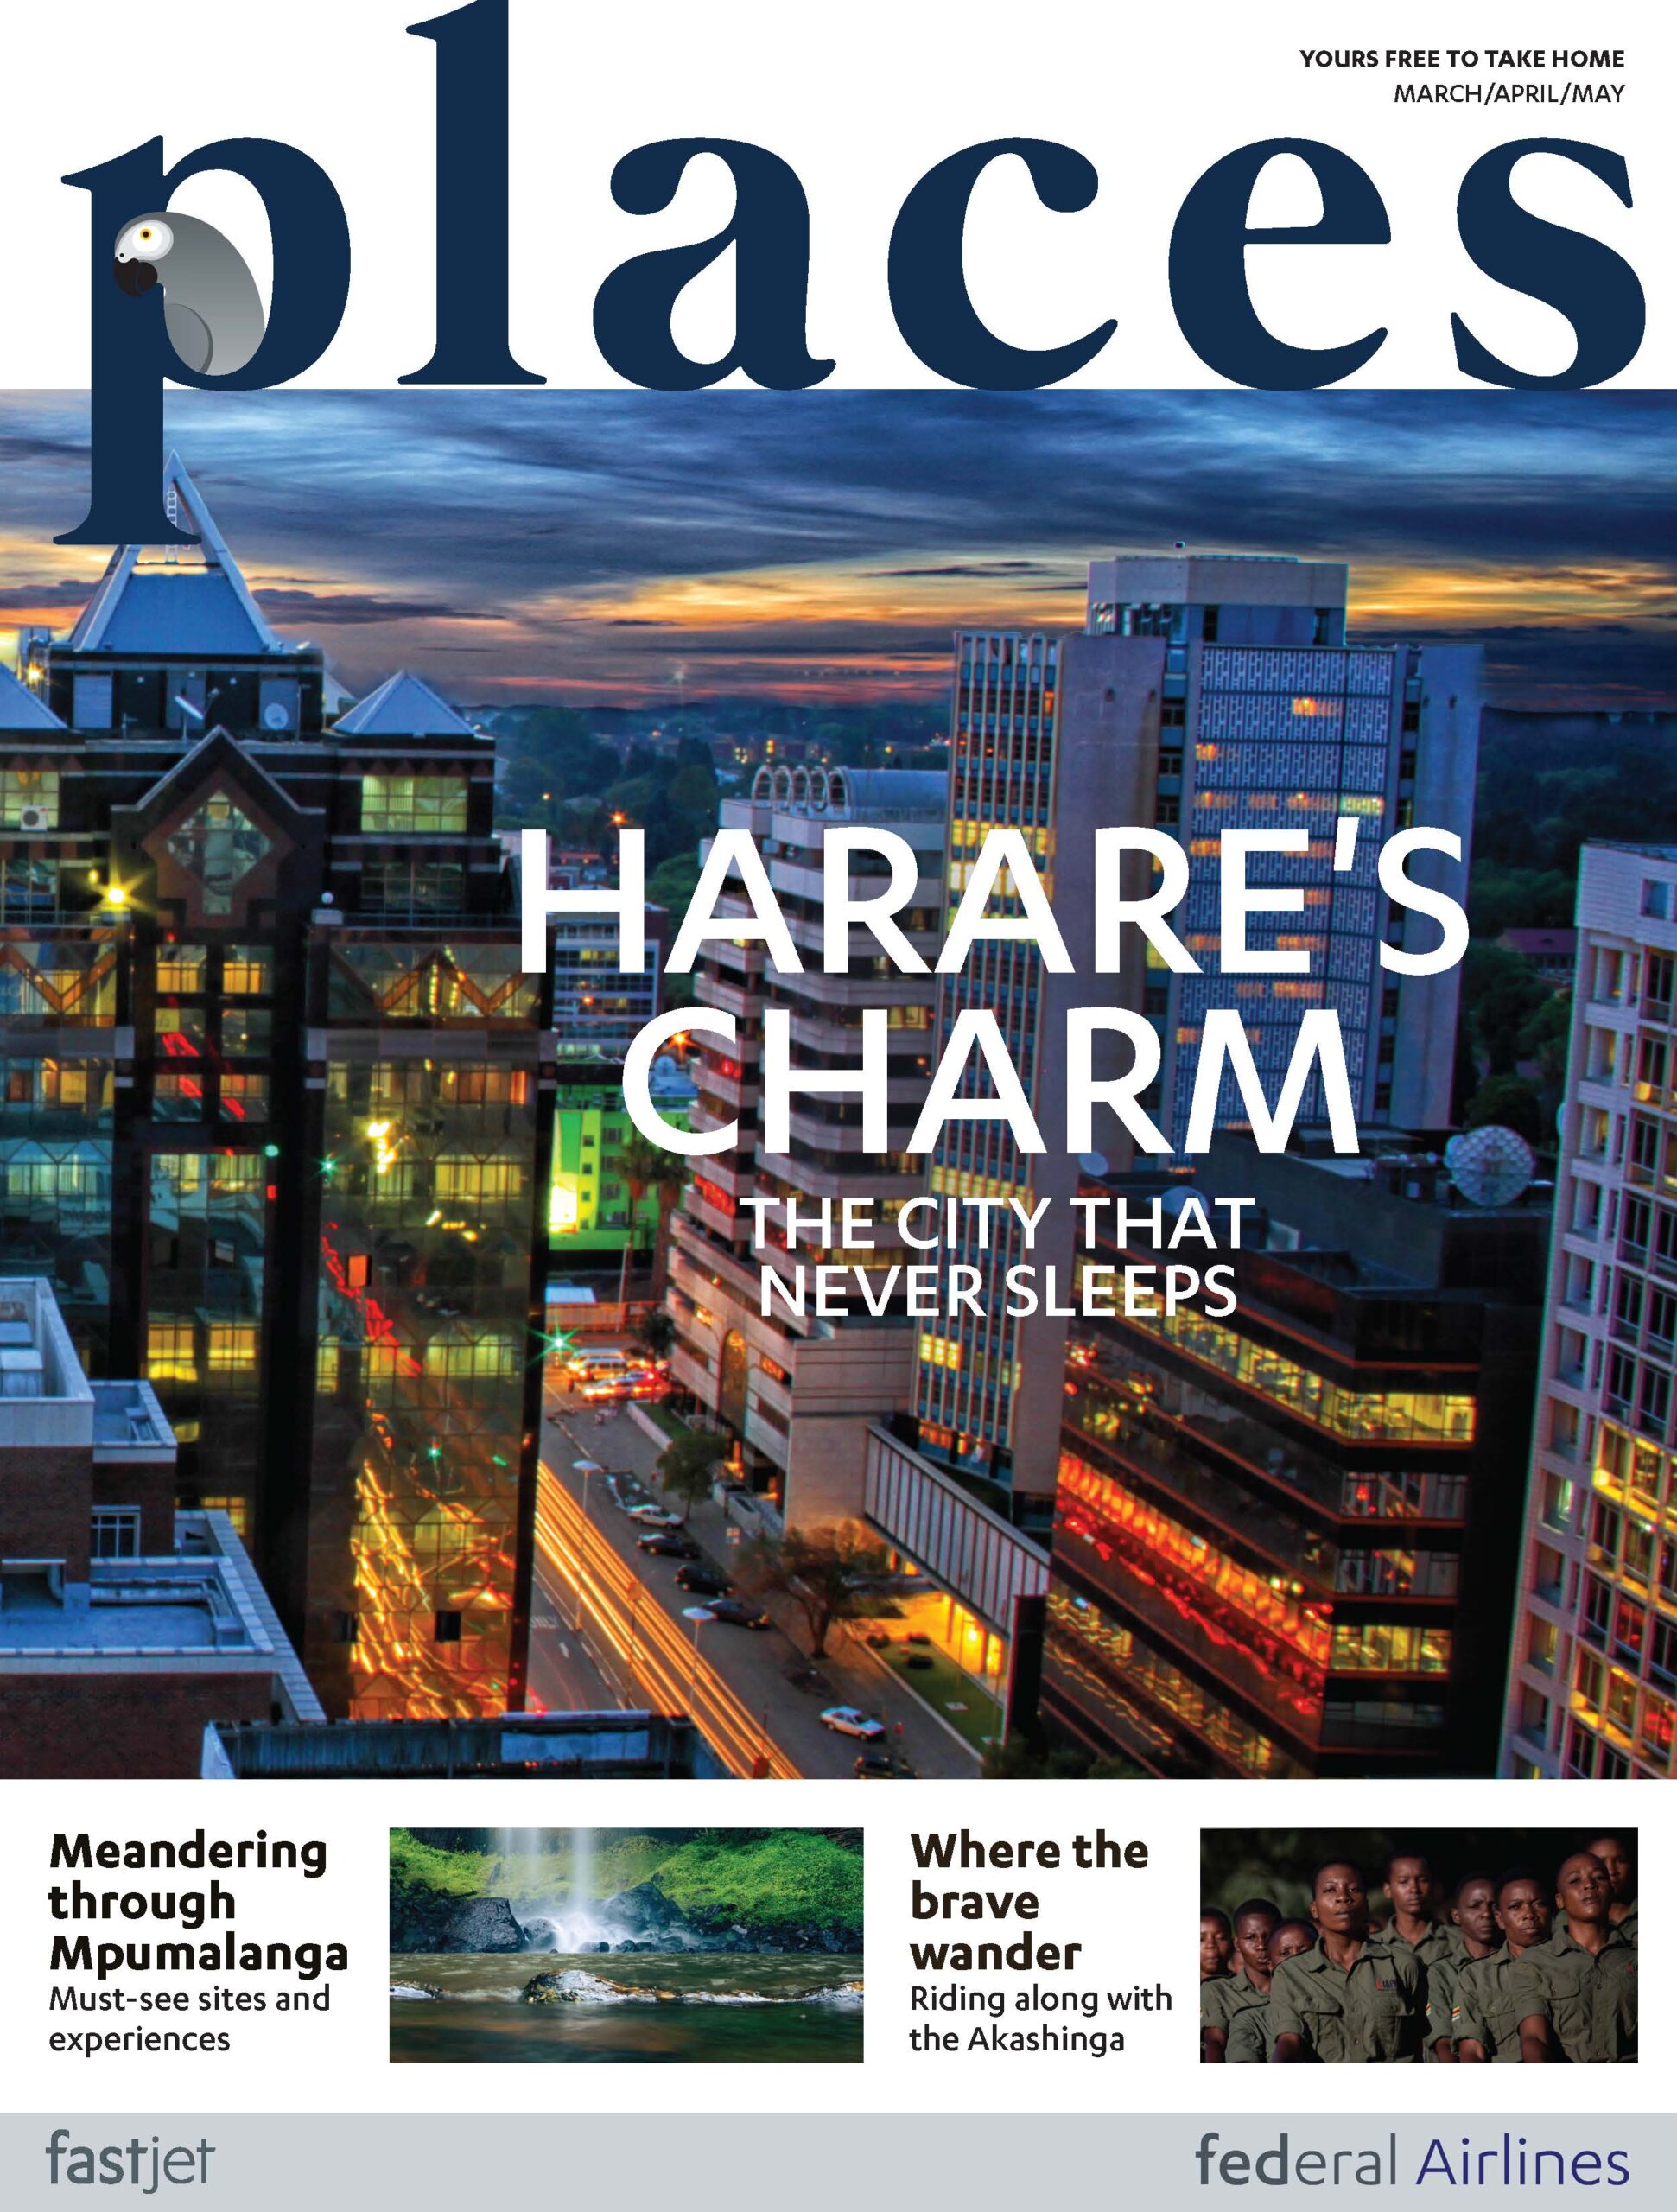 Places Magazine